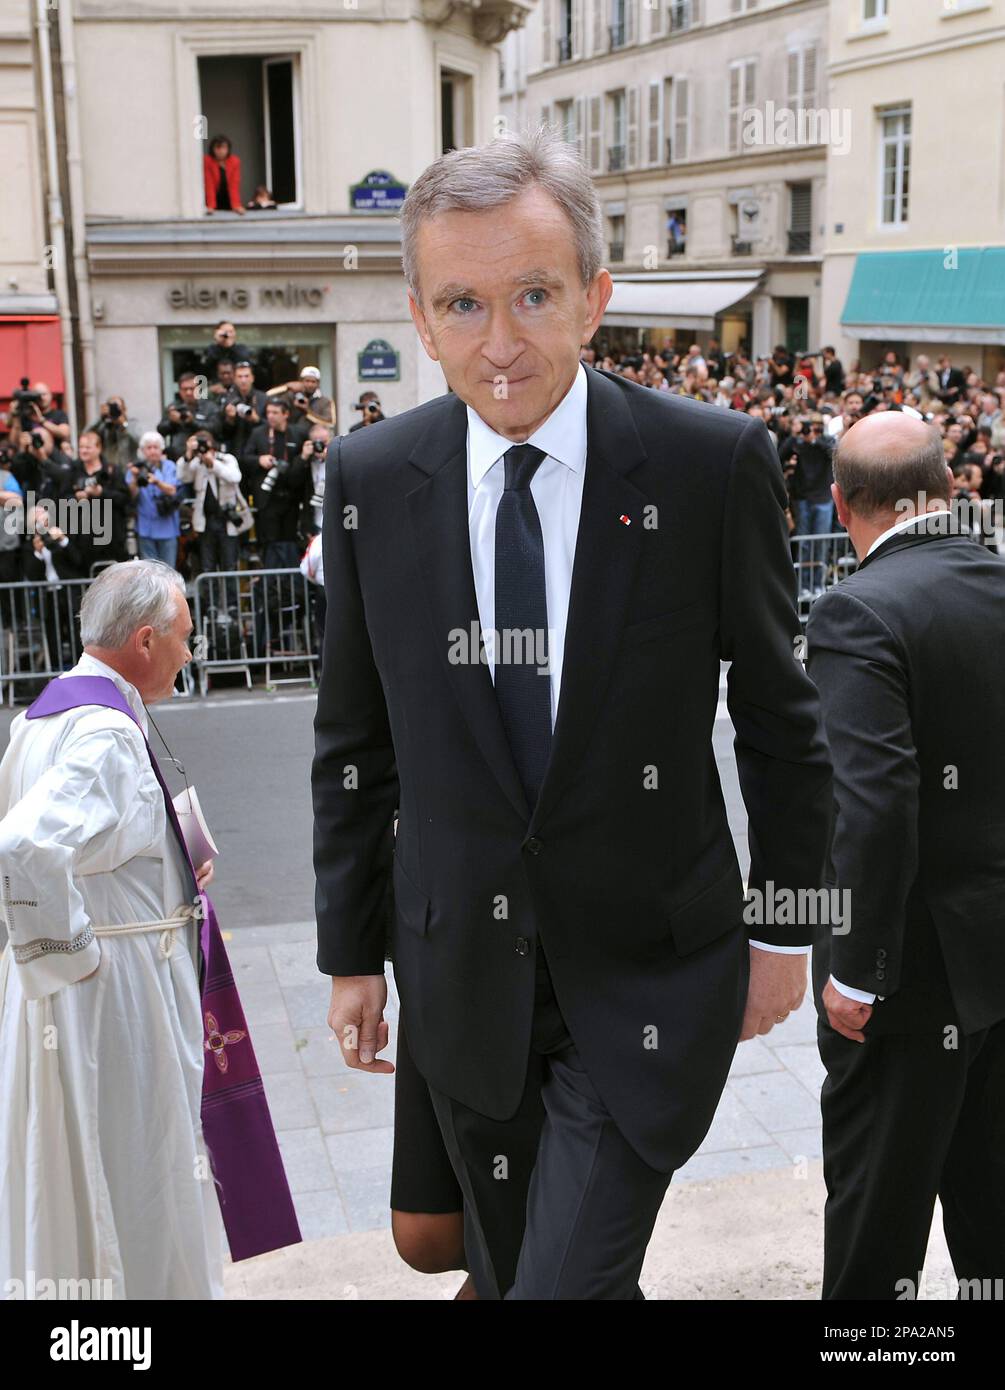 Head of French luxury group LVMH Bernard Arnault arrives at Saint